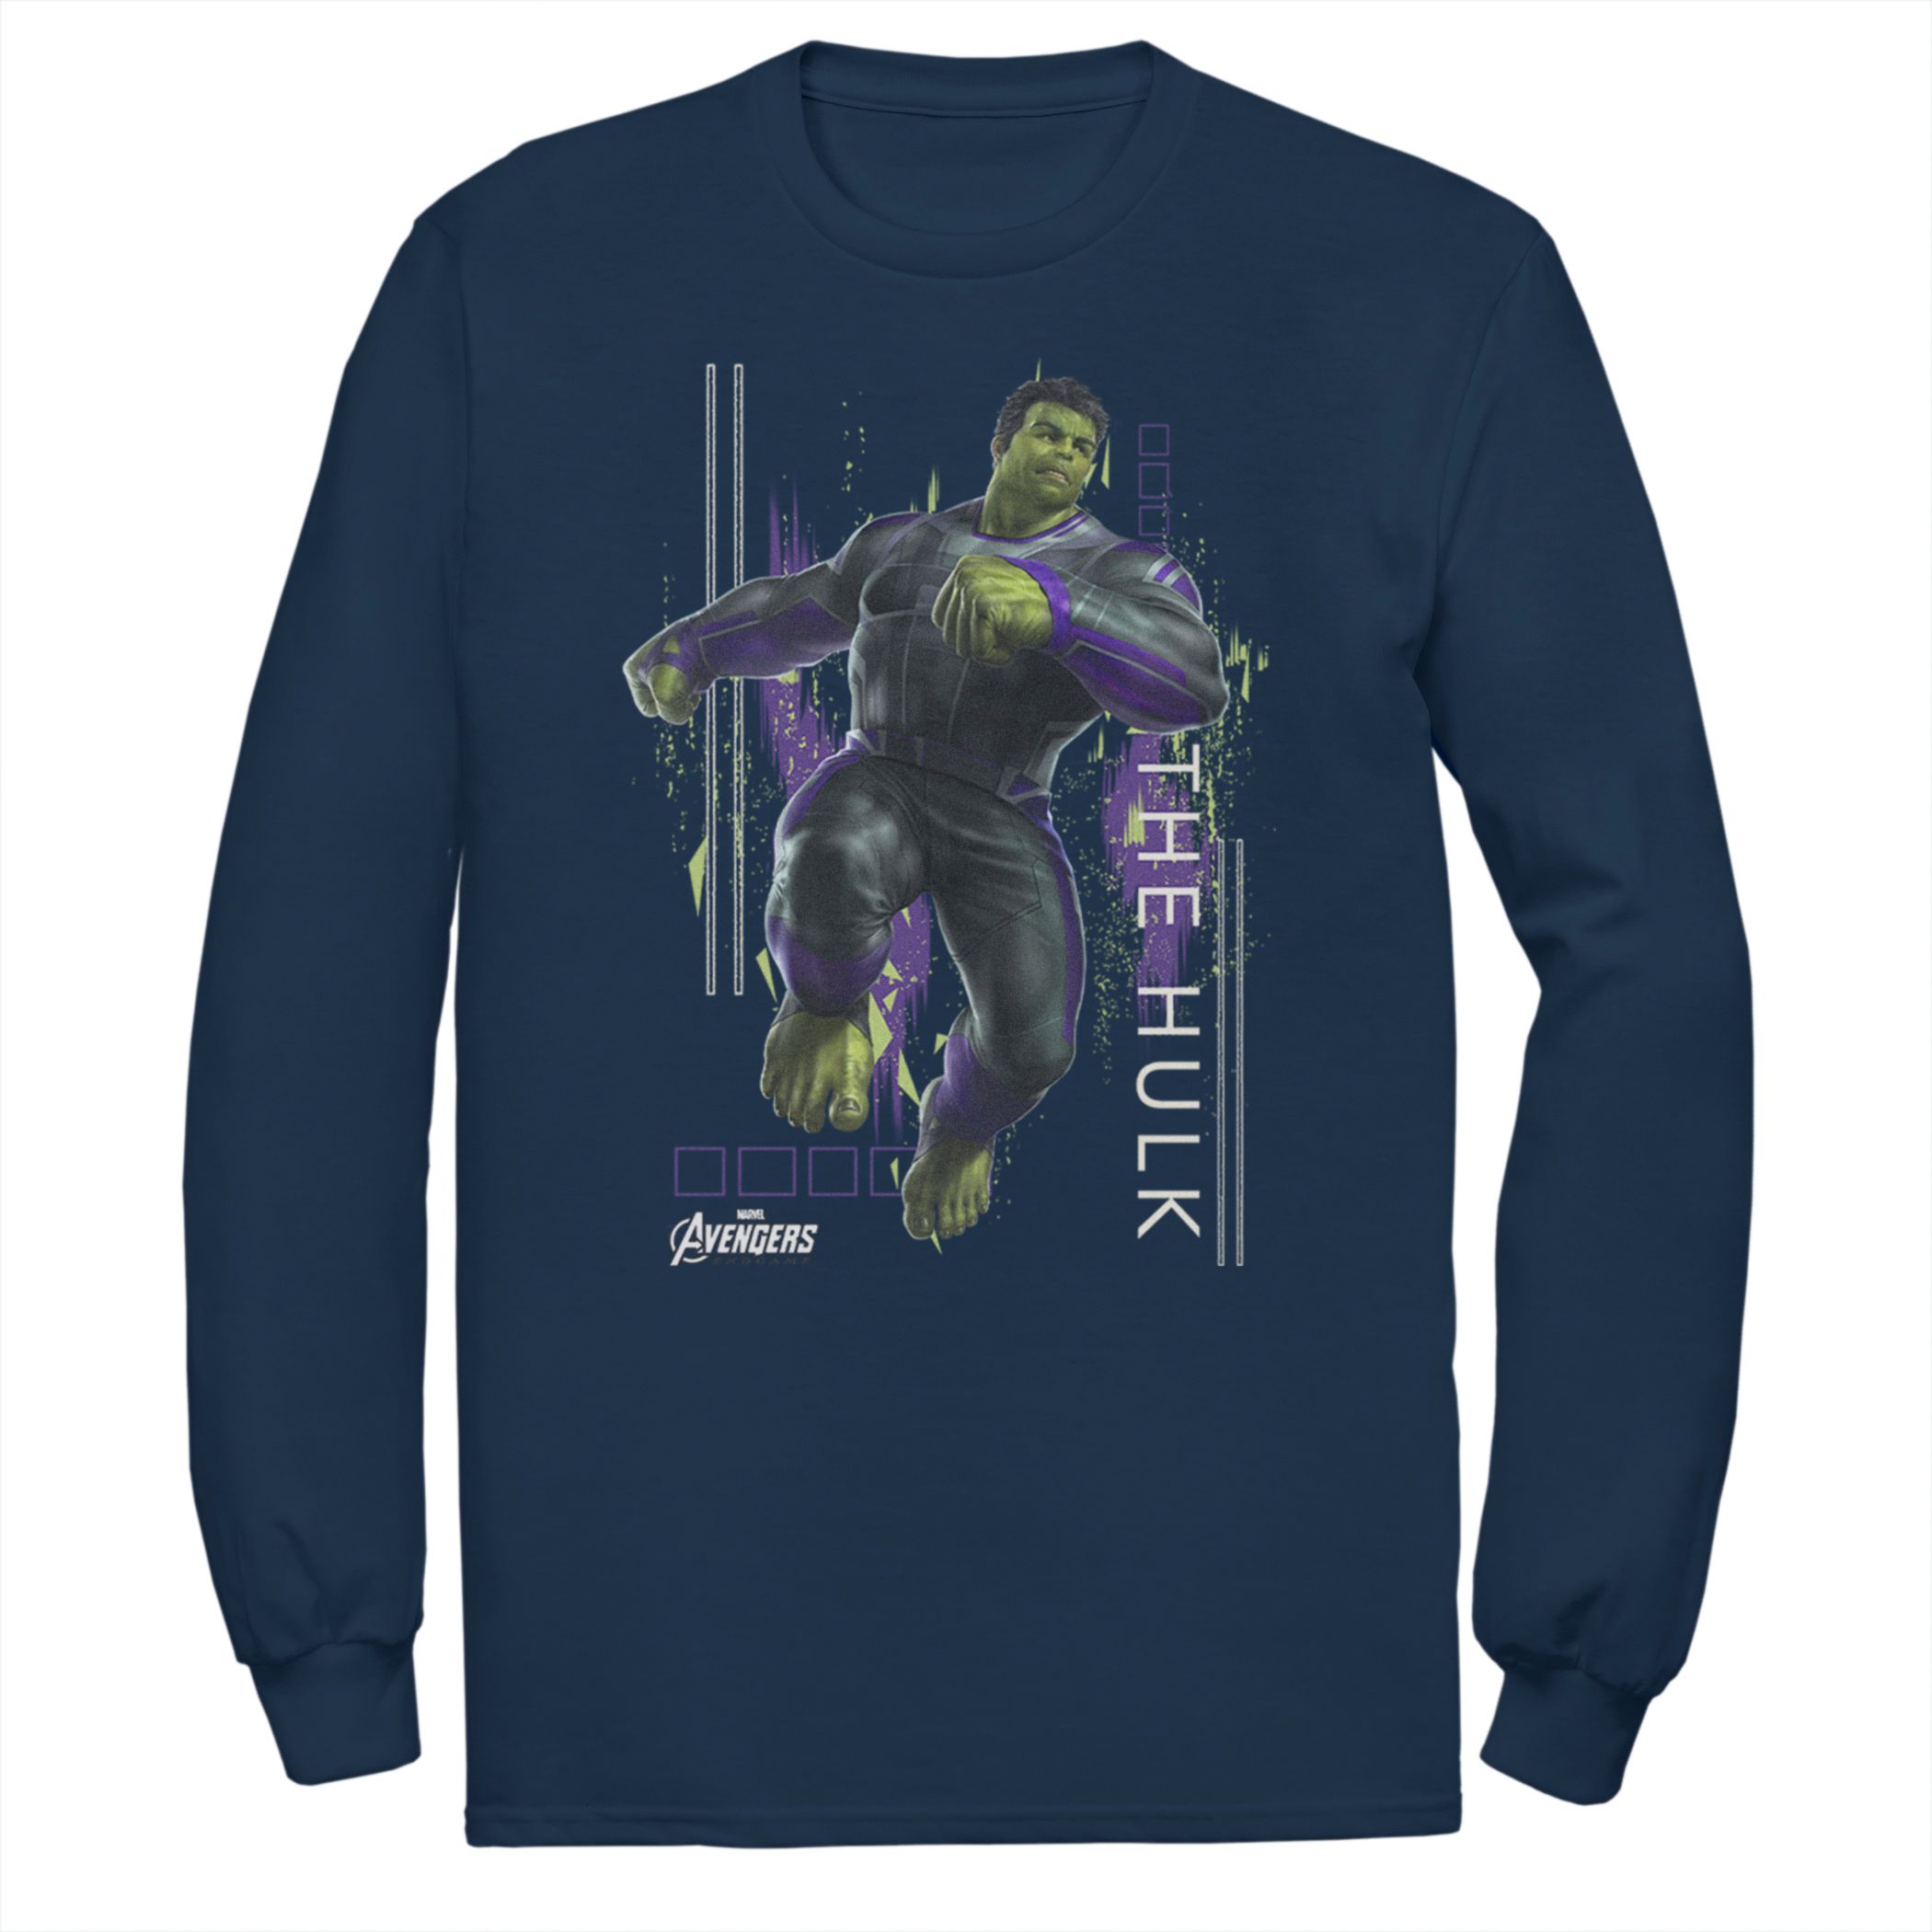 Мужская футболка с геометрическим рисунком «Marvel Avengers Endgame Hulk» Licensed Character мужская футболка marvel avengers endgame circle hulk licensed character